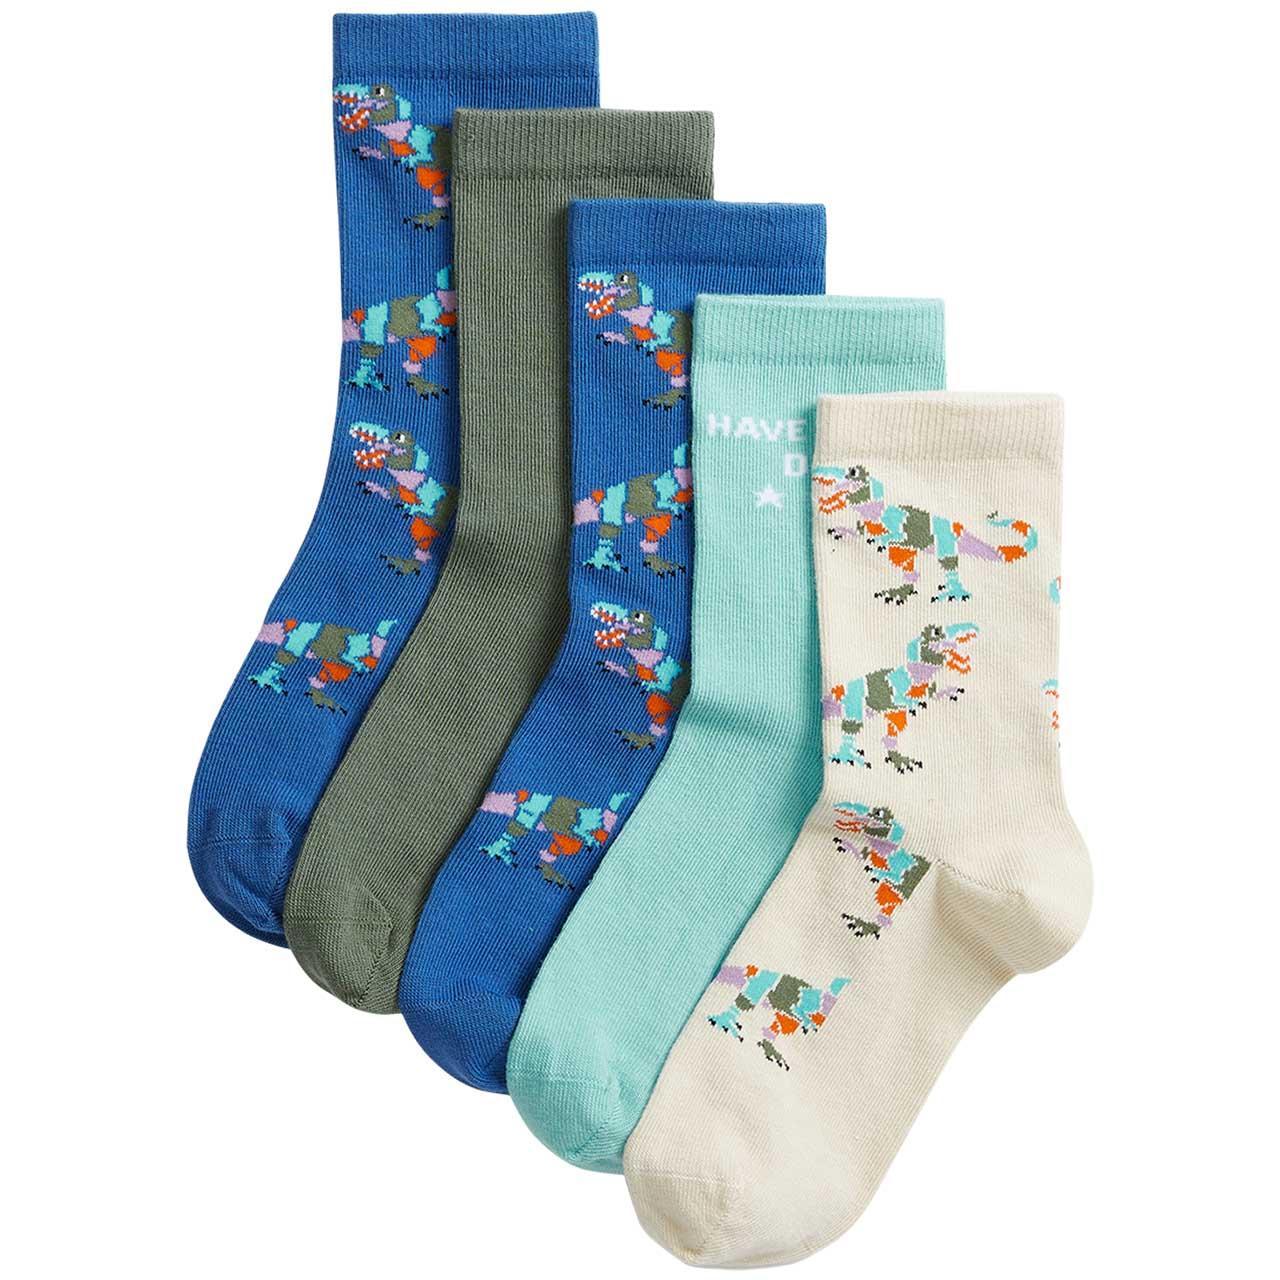 M&S Cotton Dinosaur Socks, 8-12 Small, Multi